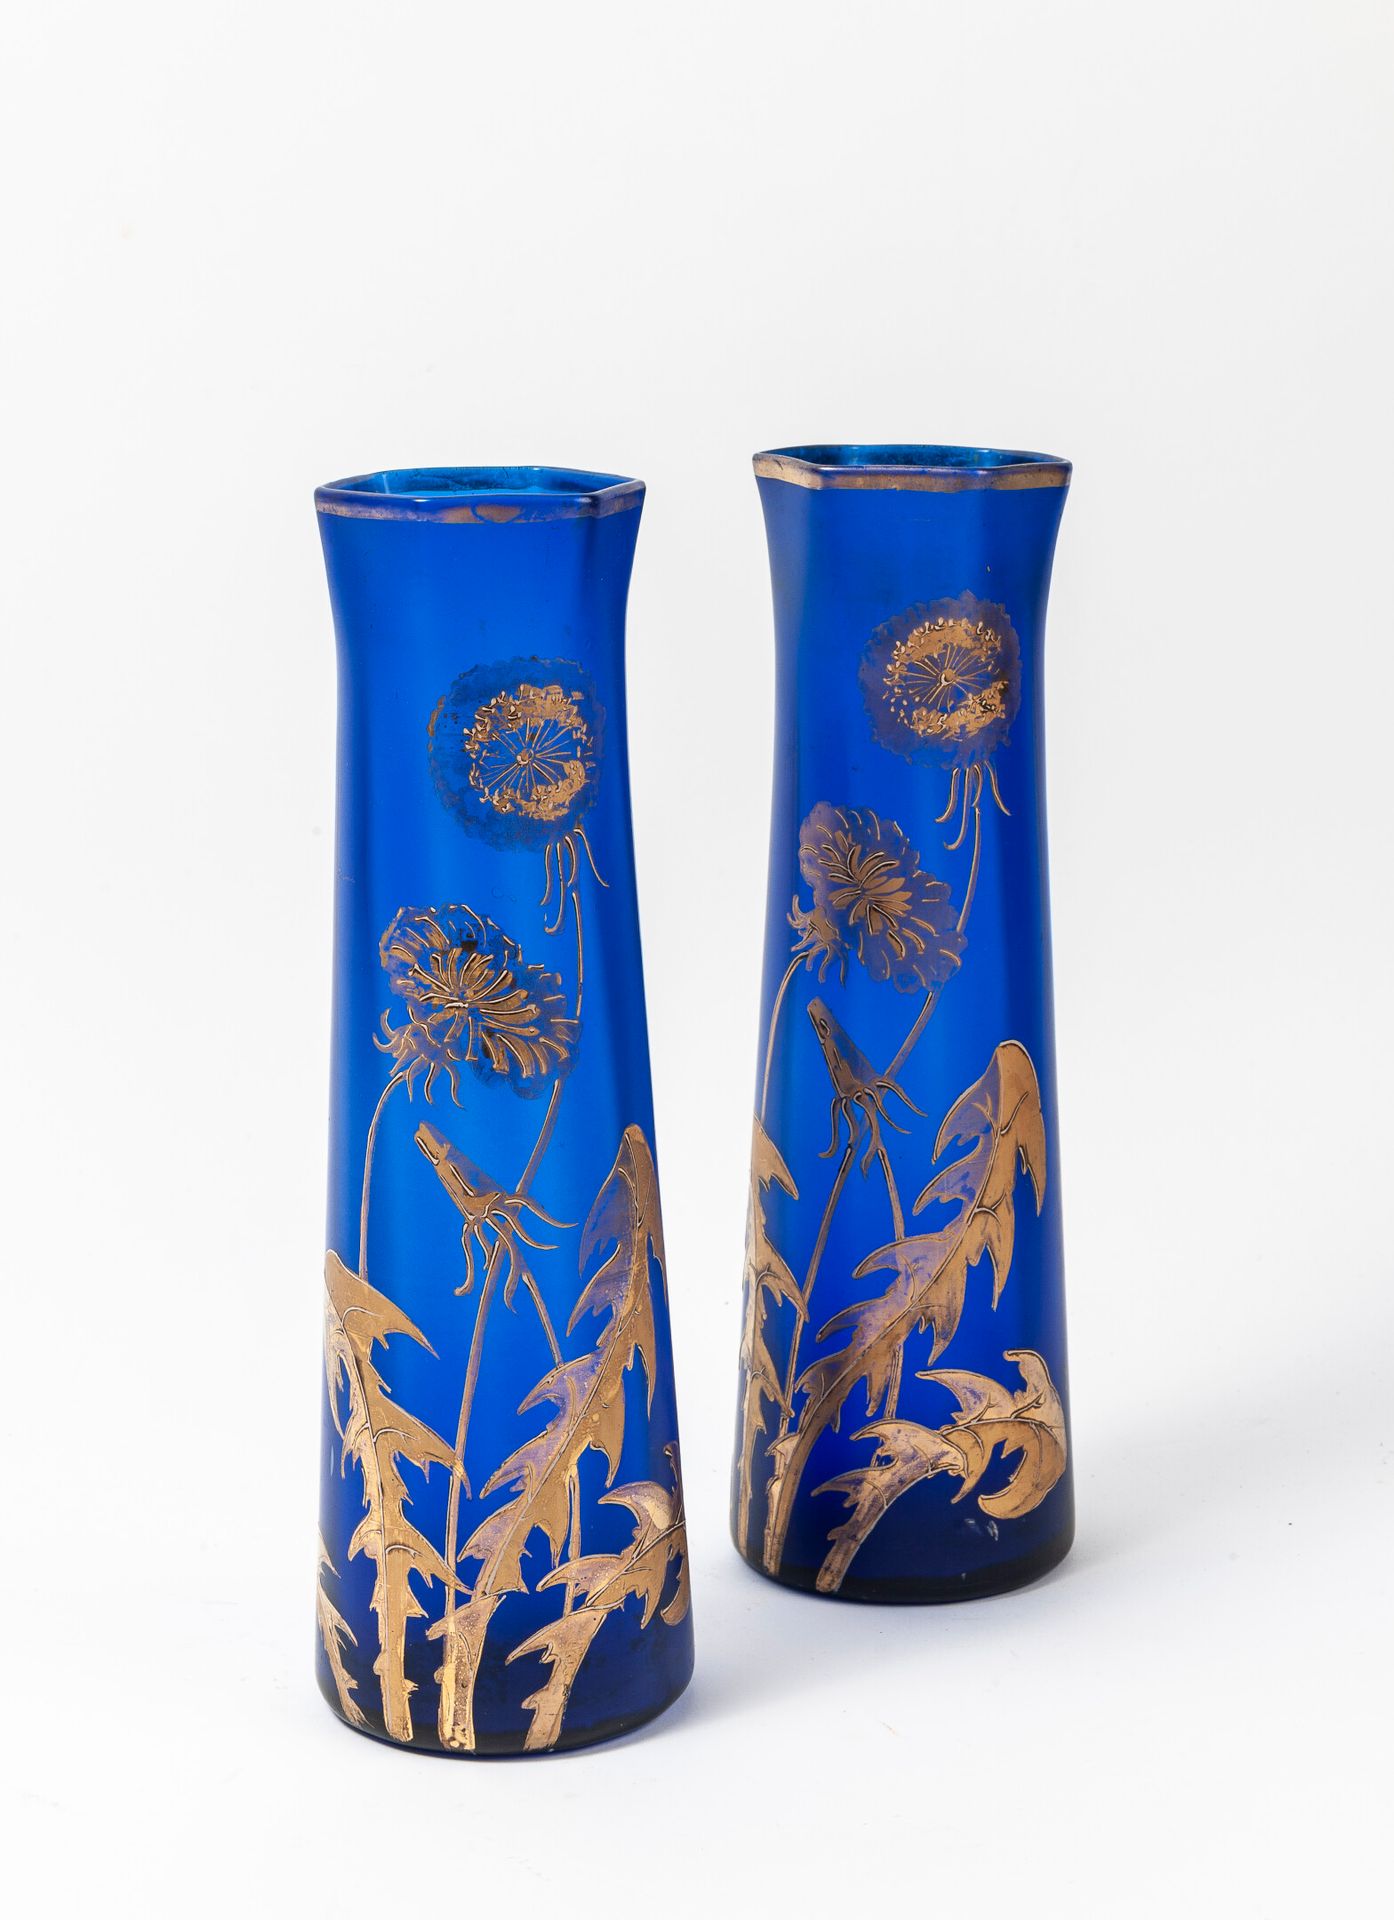 Null 一对蓝色着色的玻璃花瓶，上面有金色的花朵。

新艺术运动作品。

H.25,8厘米。